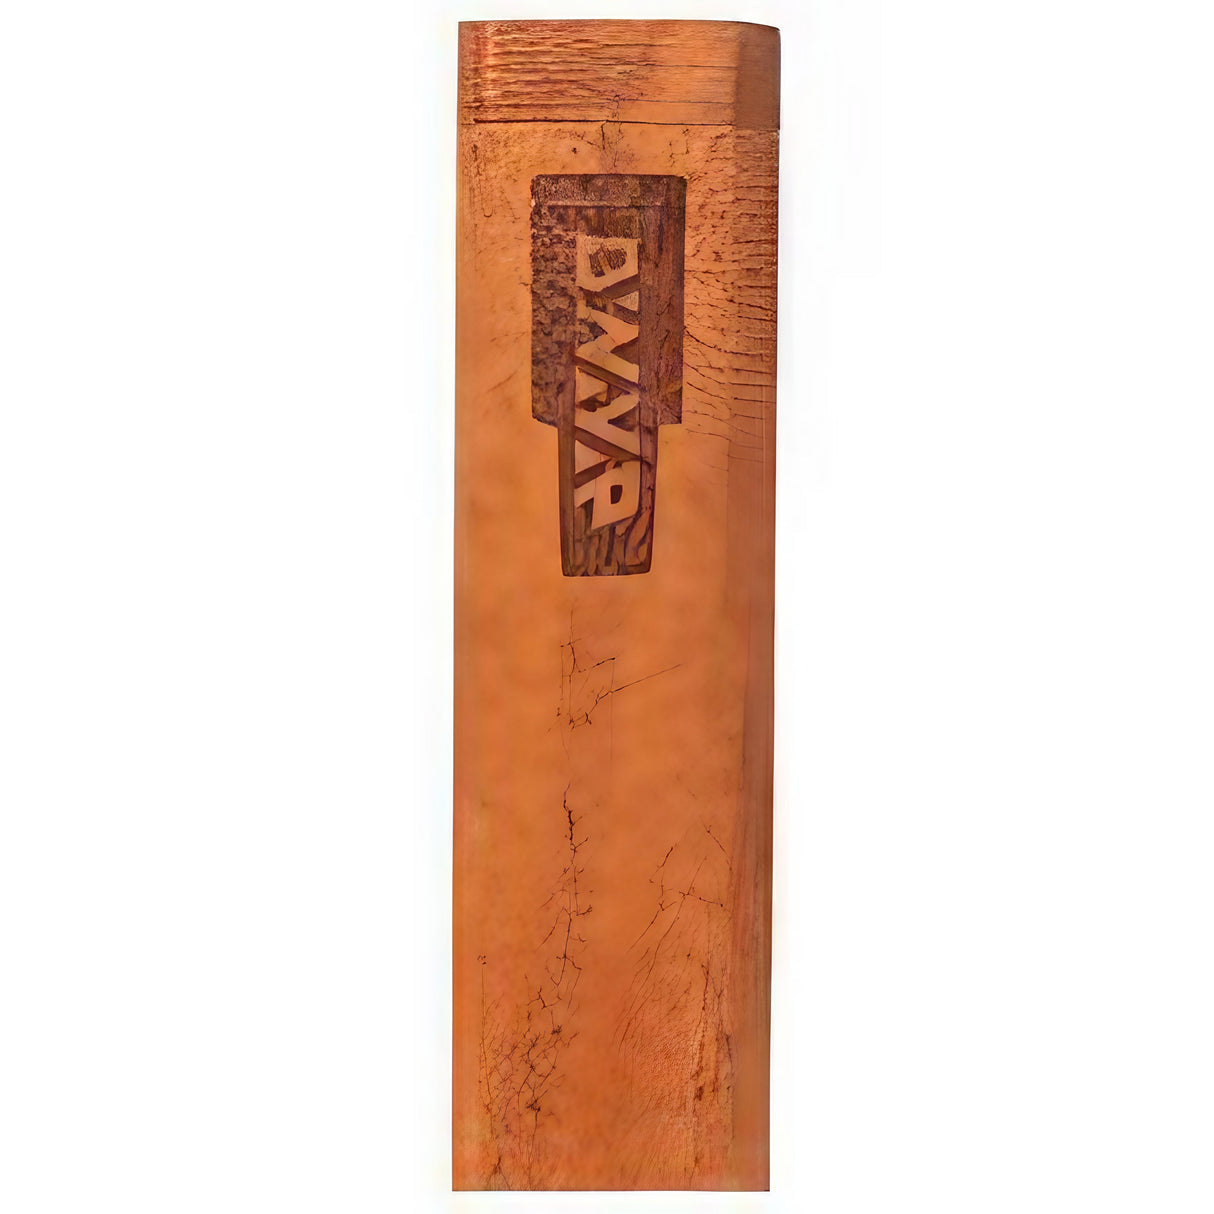 DynaVap SlimStash - Wooden Storage Case - Front View with Engraved Logo